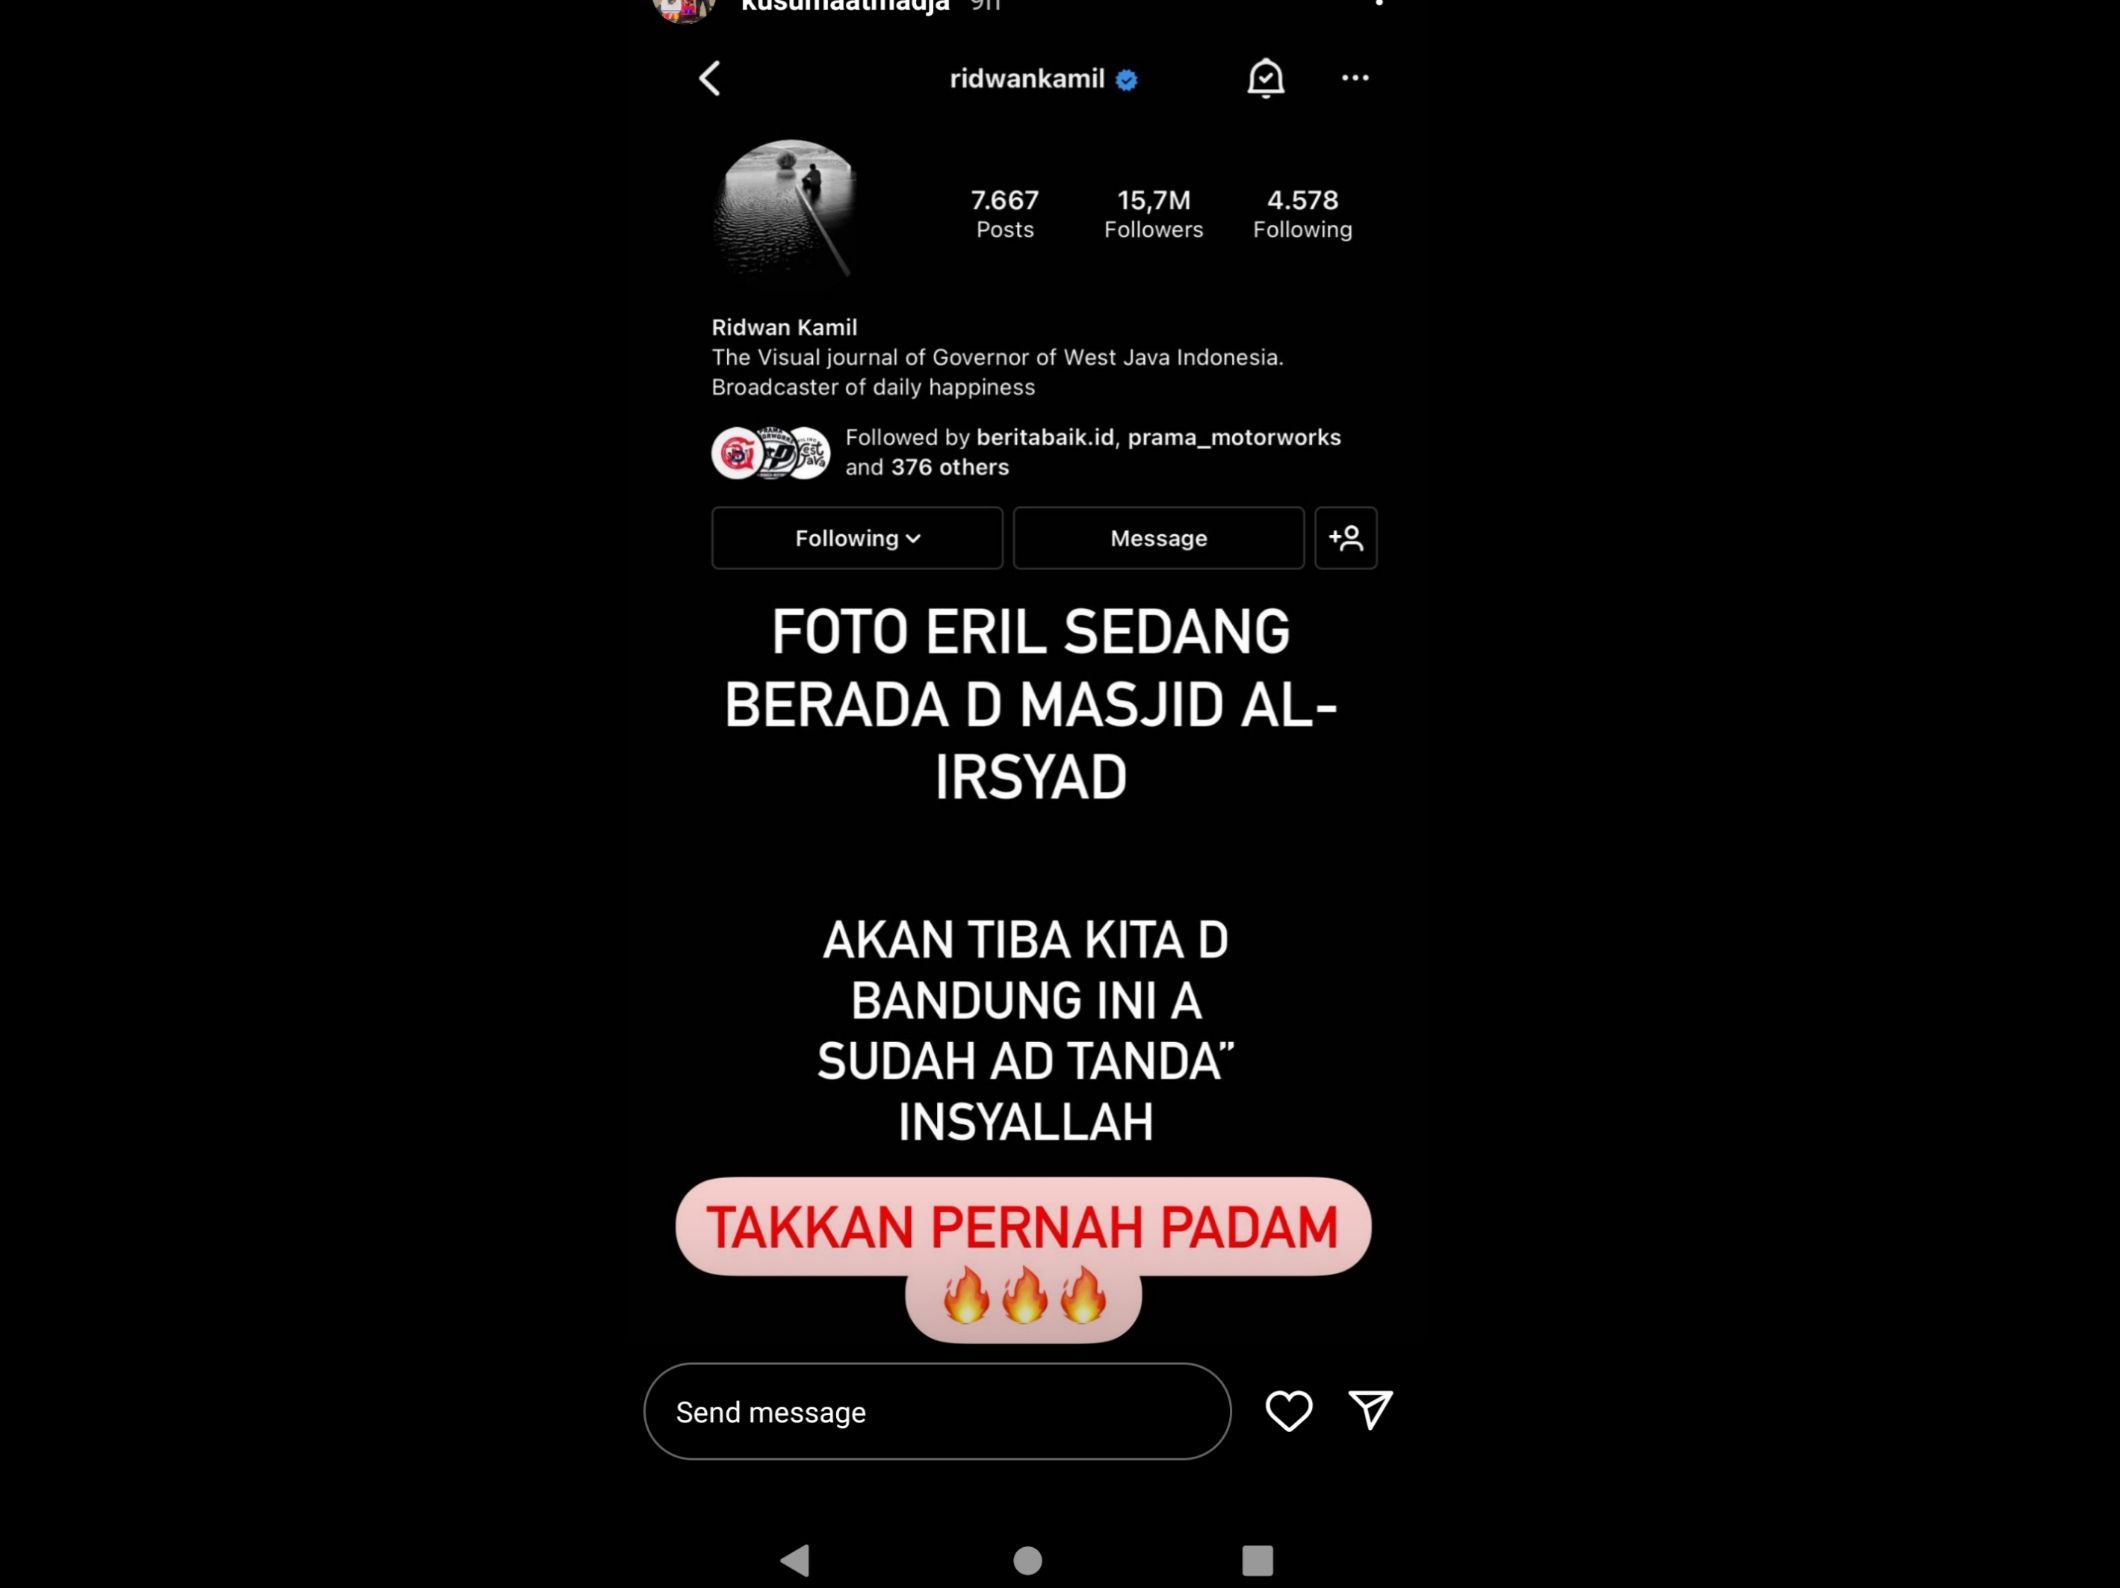 Unggahan kerabat Ridwan Kamil di Instagram.